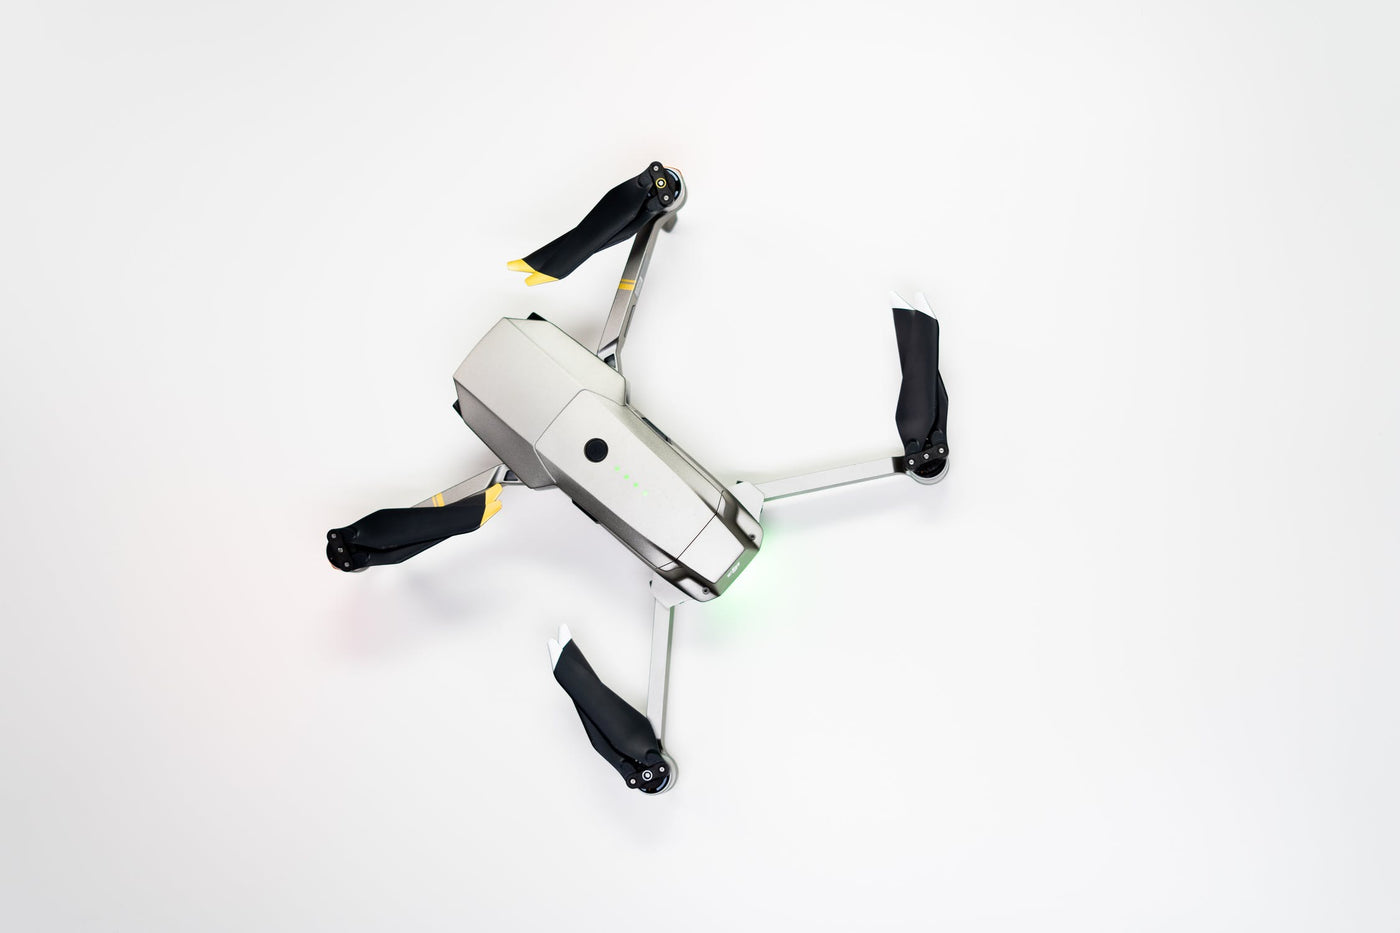 White and Black DJI Mavic Drone on White Surface